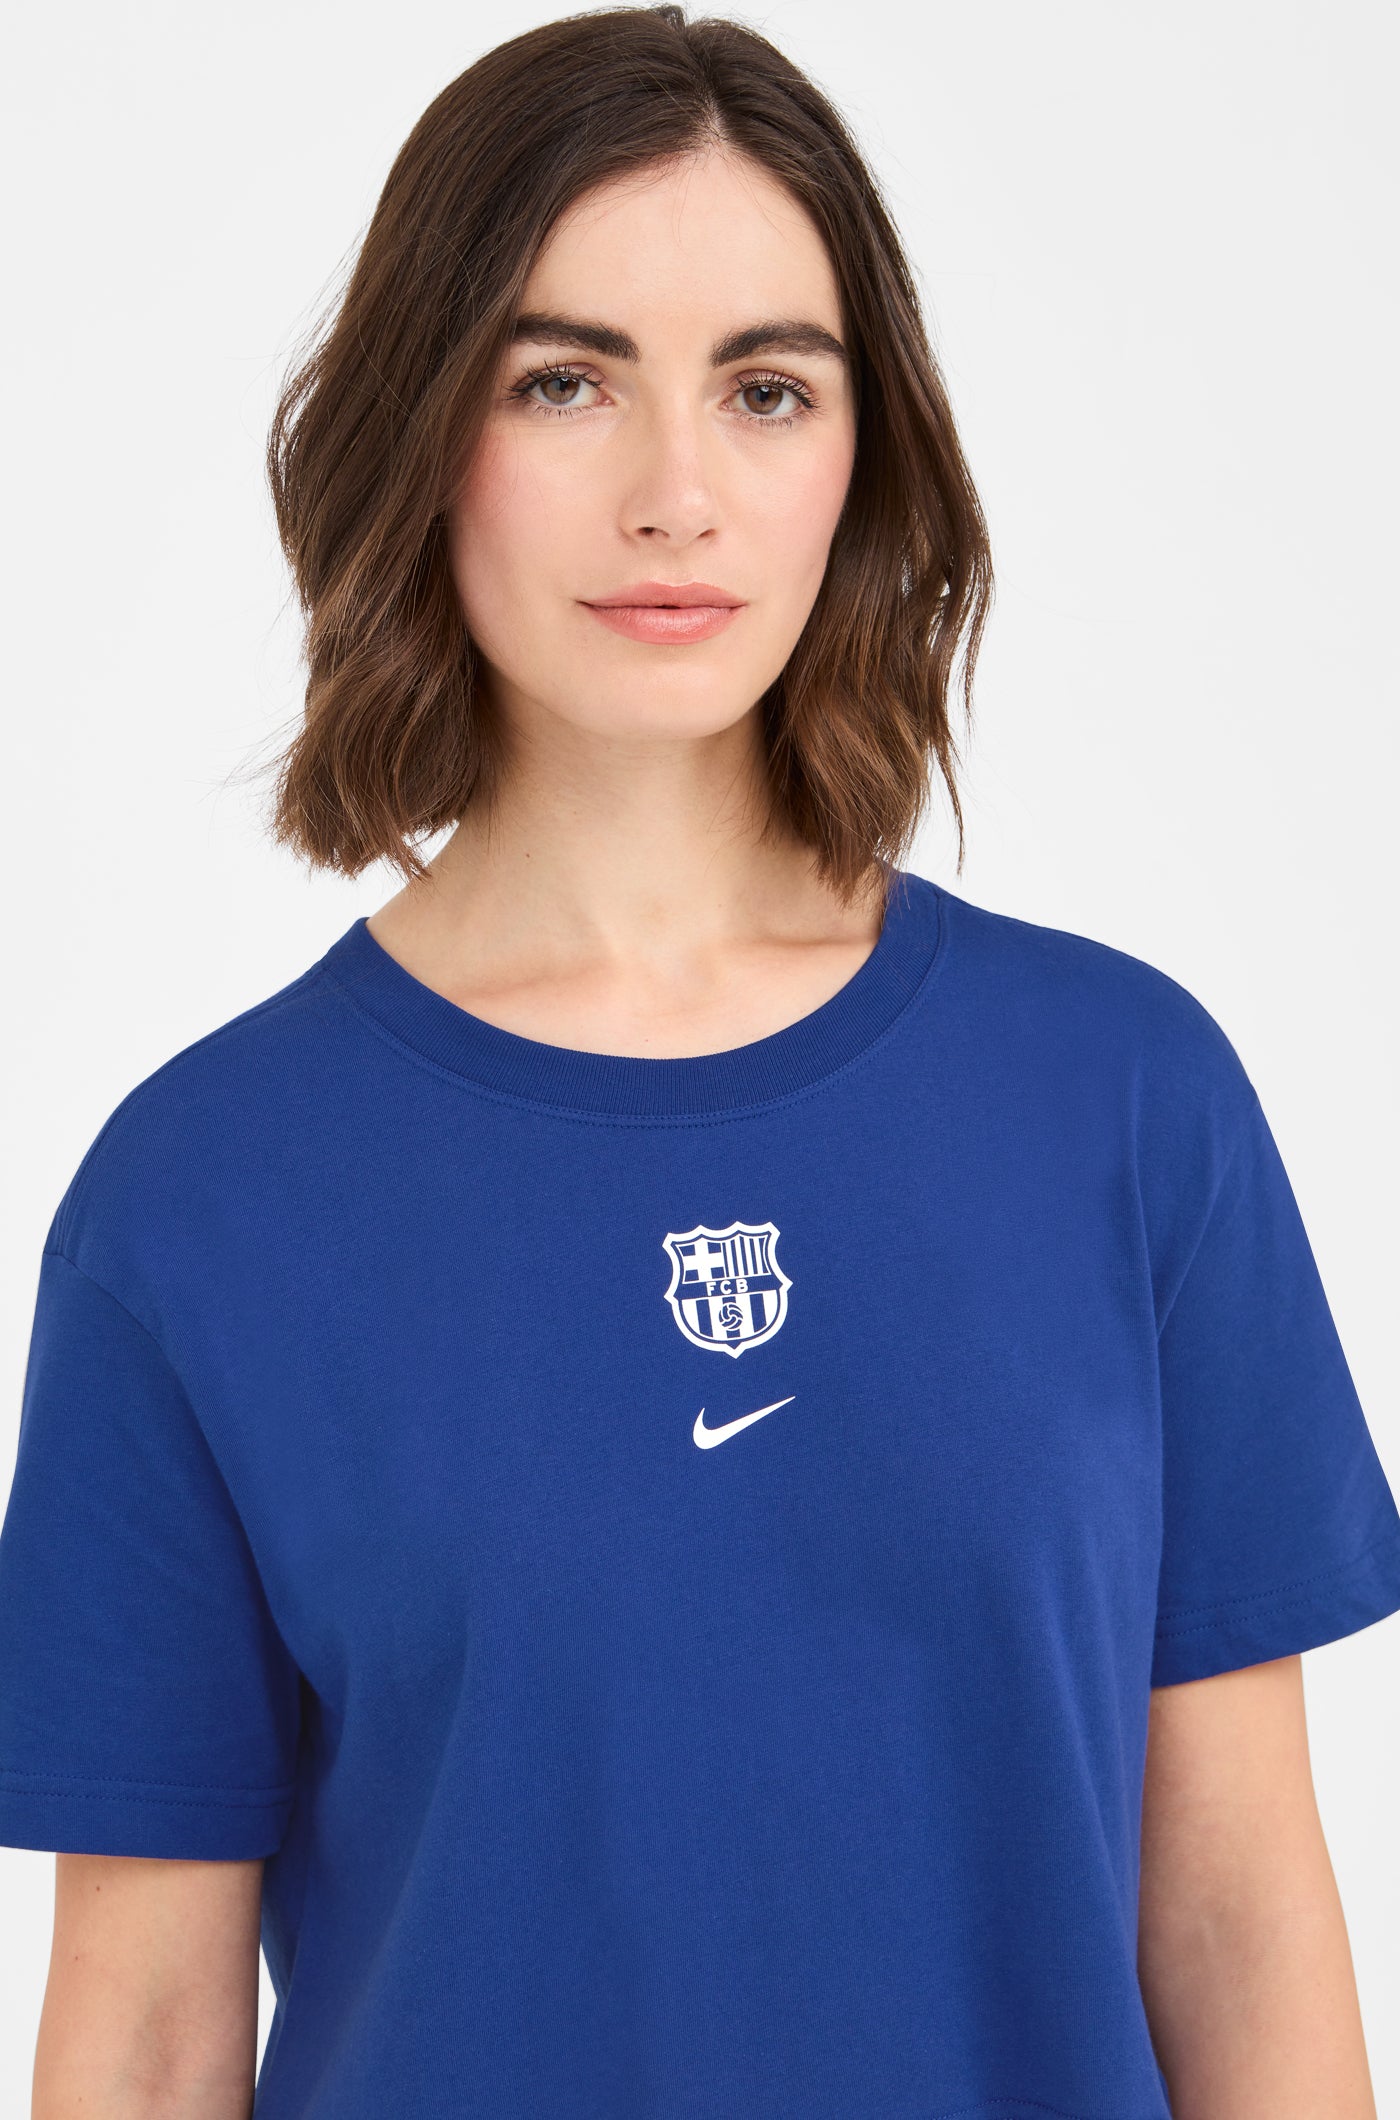 Crop top blue shield Barça Nike - Woman